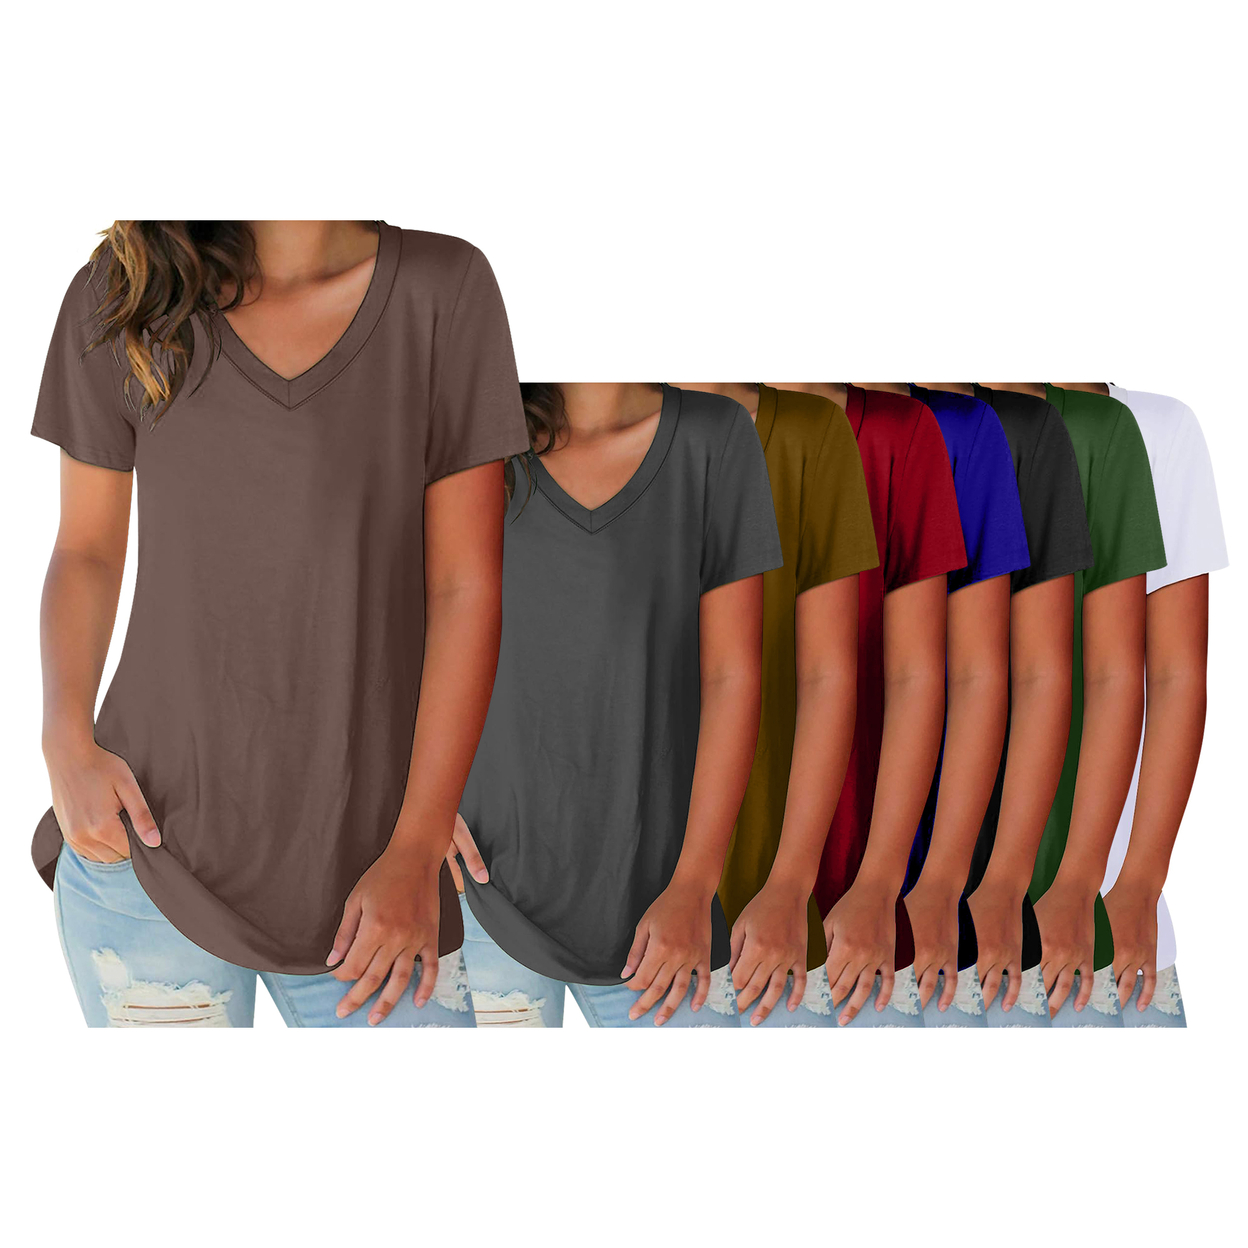 3-Pack: Women's Ultra Soft Smooth Cotton Blend Basic V-Neck Short Sleeve Shirts - Black, Grey, Brown, X-large